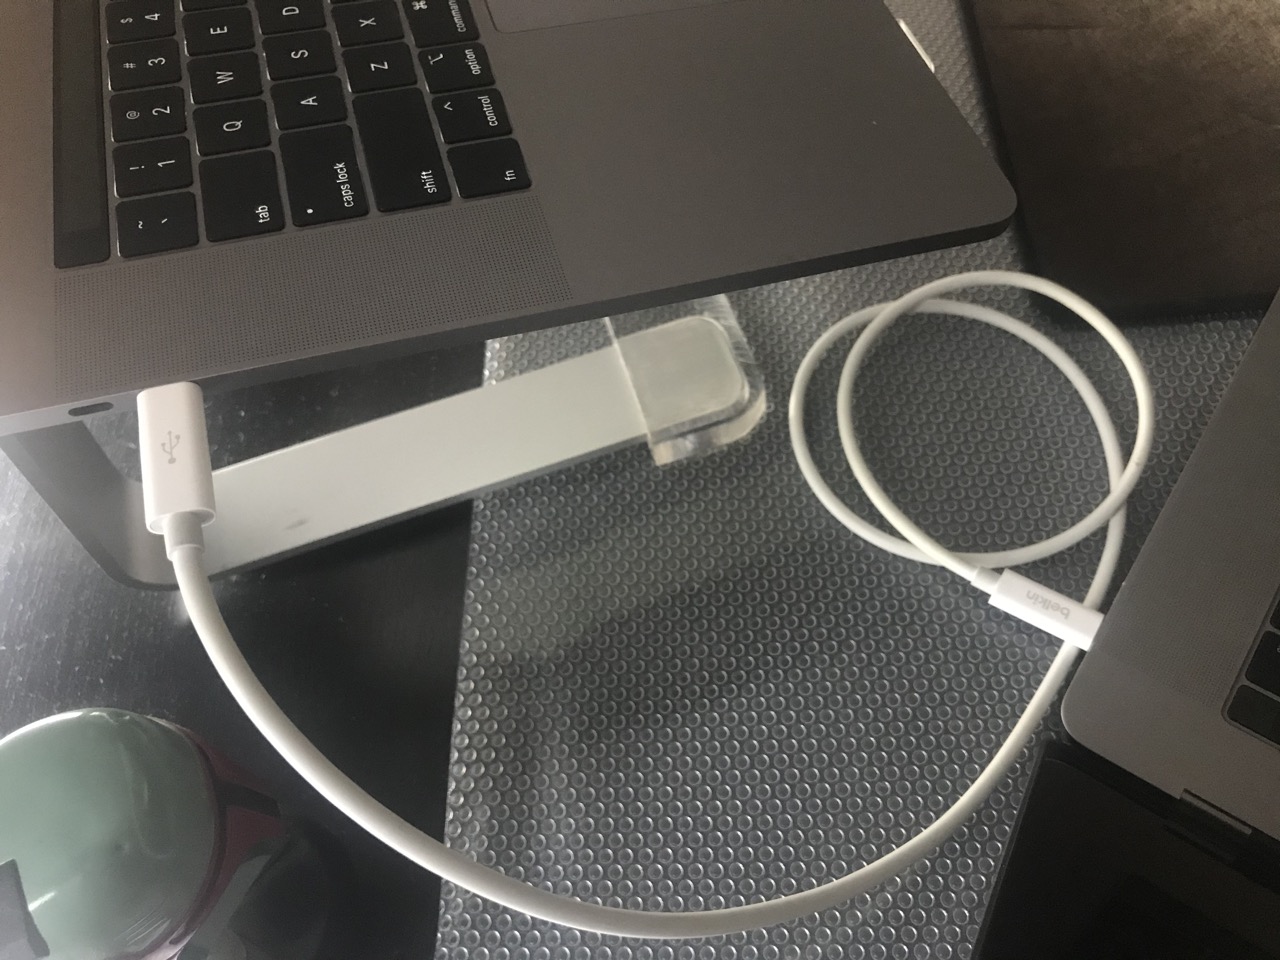 Transferring data between two Macs using USB-C cable | Igor Kromin